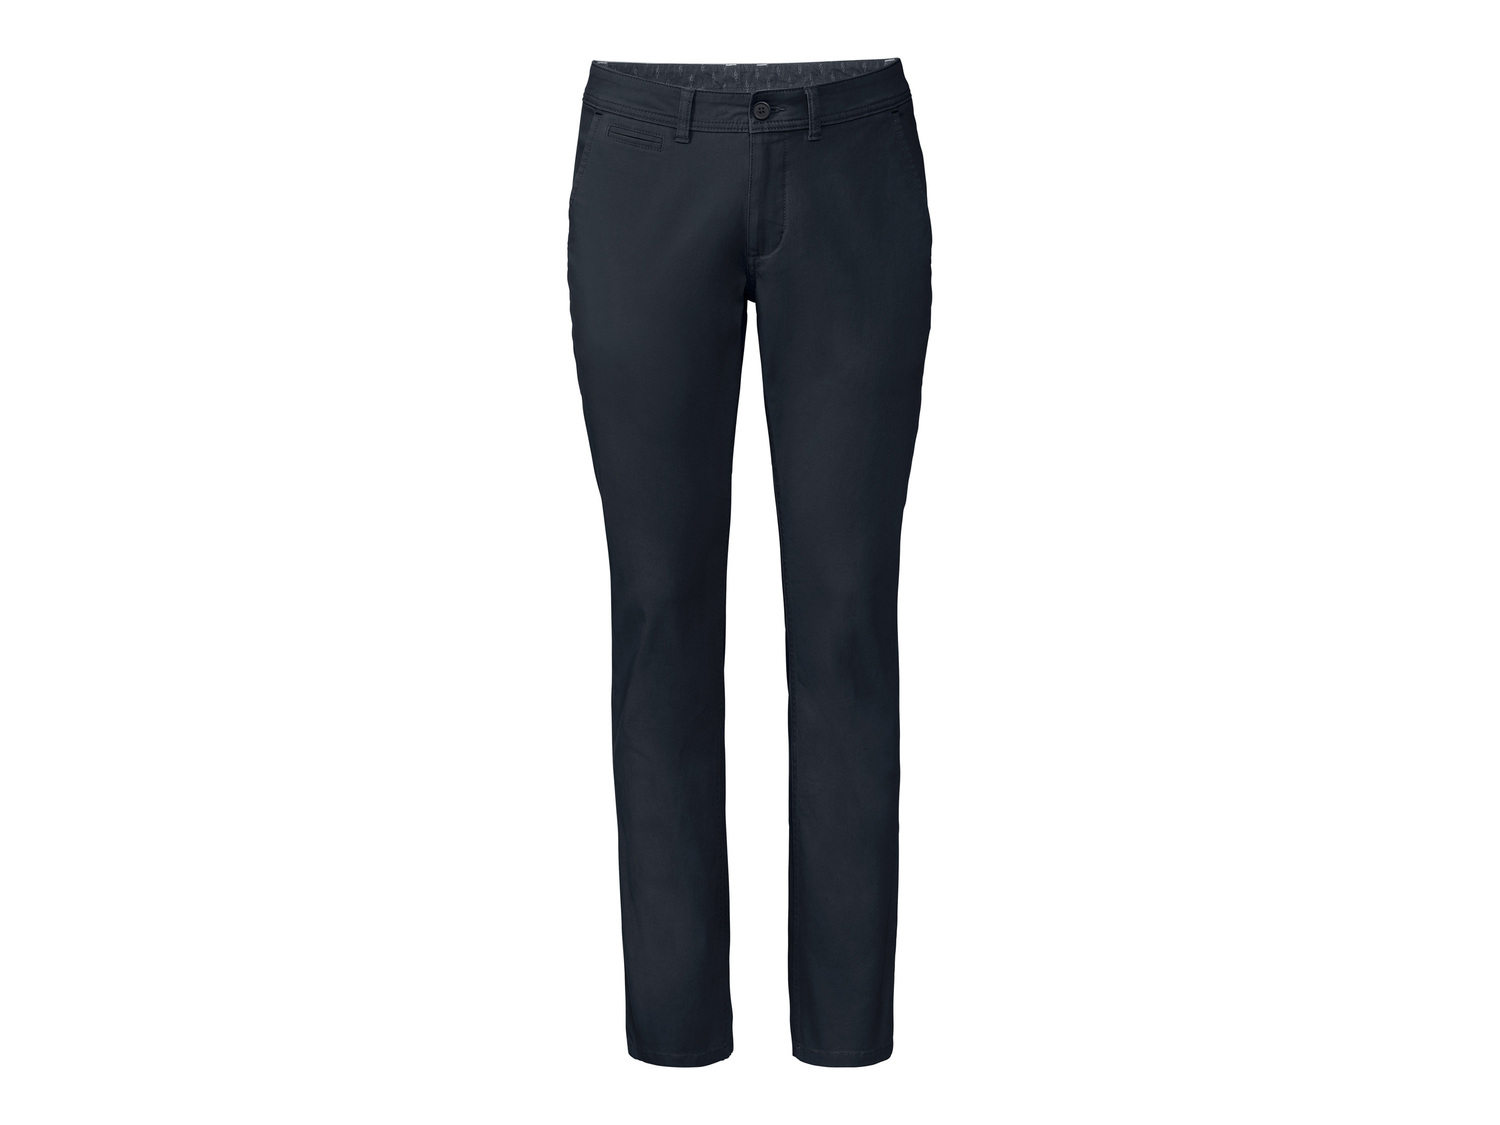 Pantaloni Slim Fit da uomo Livergy, prezzo 11.99 &#8364; 
Misure: 46-56
Taglie ...